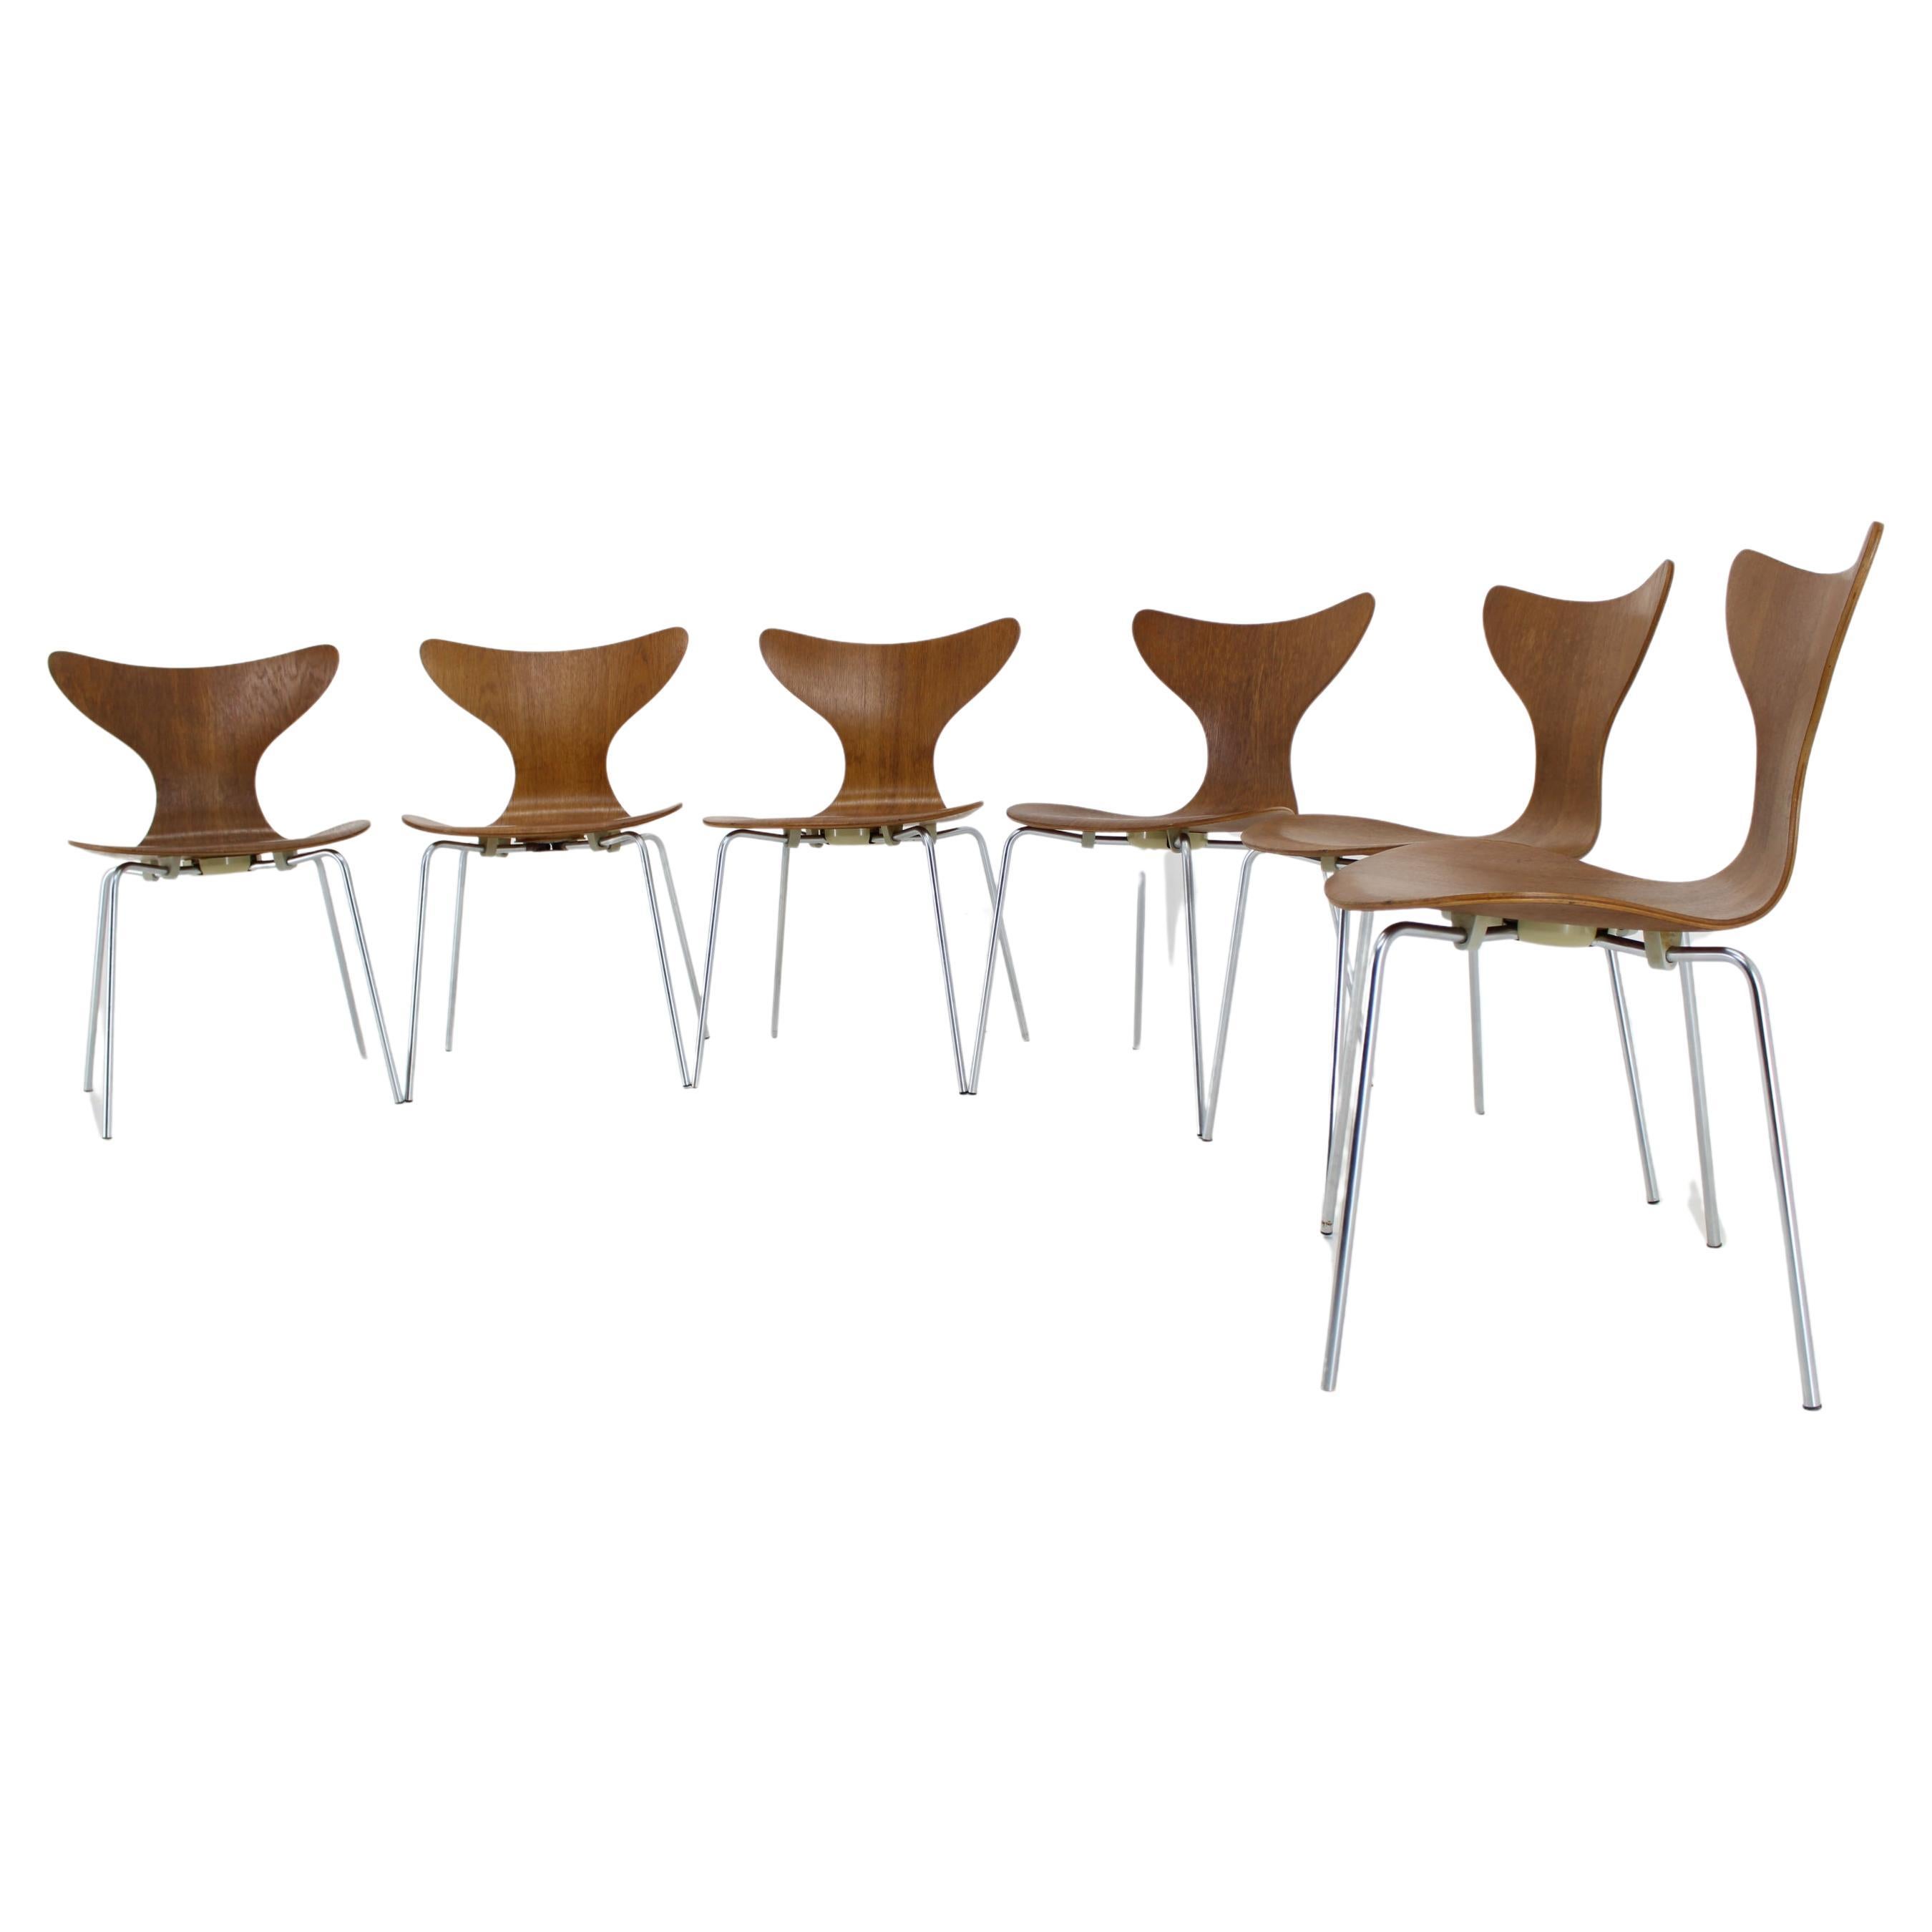 1970s Arne Jacobsen Set of Six Lily Chairs in Oak by Fritz Hansen, Denmark For Sale